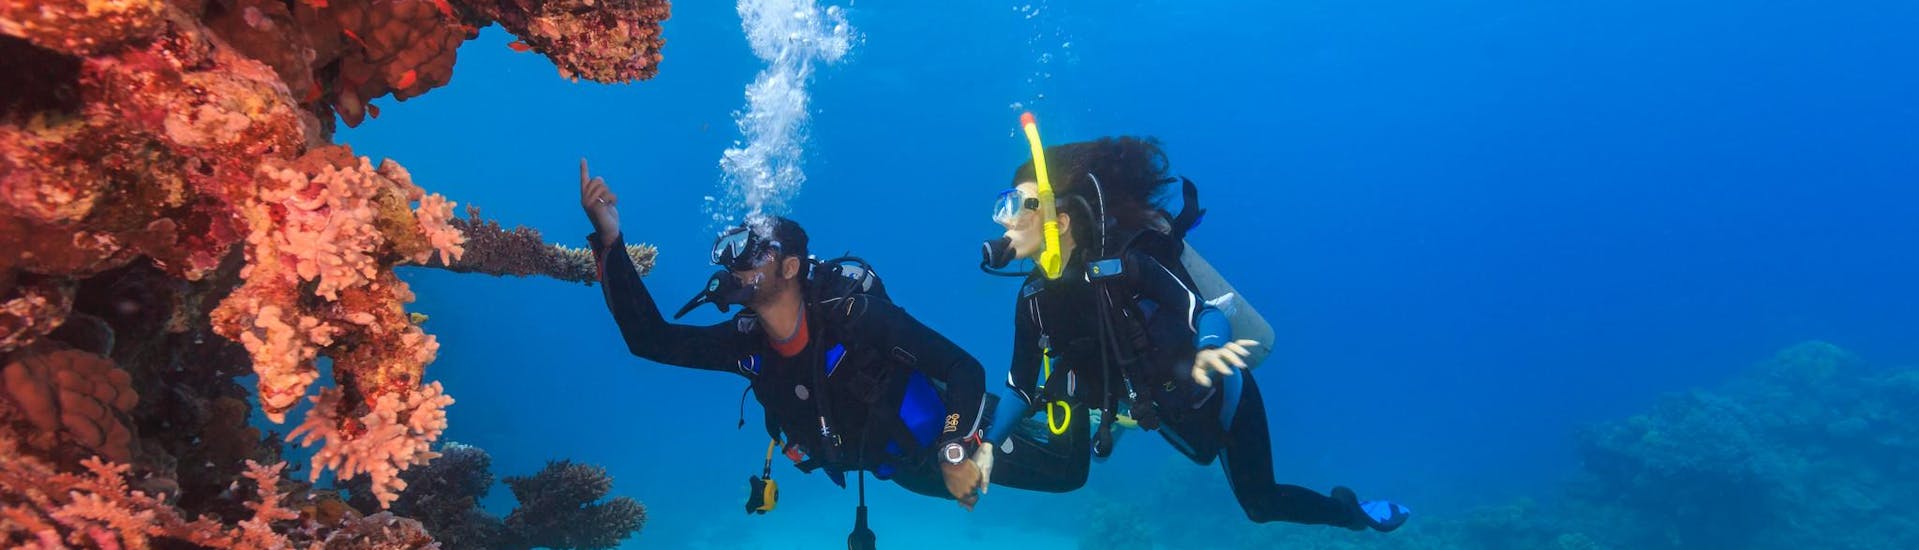 Un grupo de buceadores realiza un curso FFESSM cerca de un arrecife de coral.